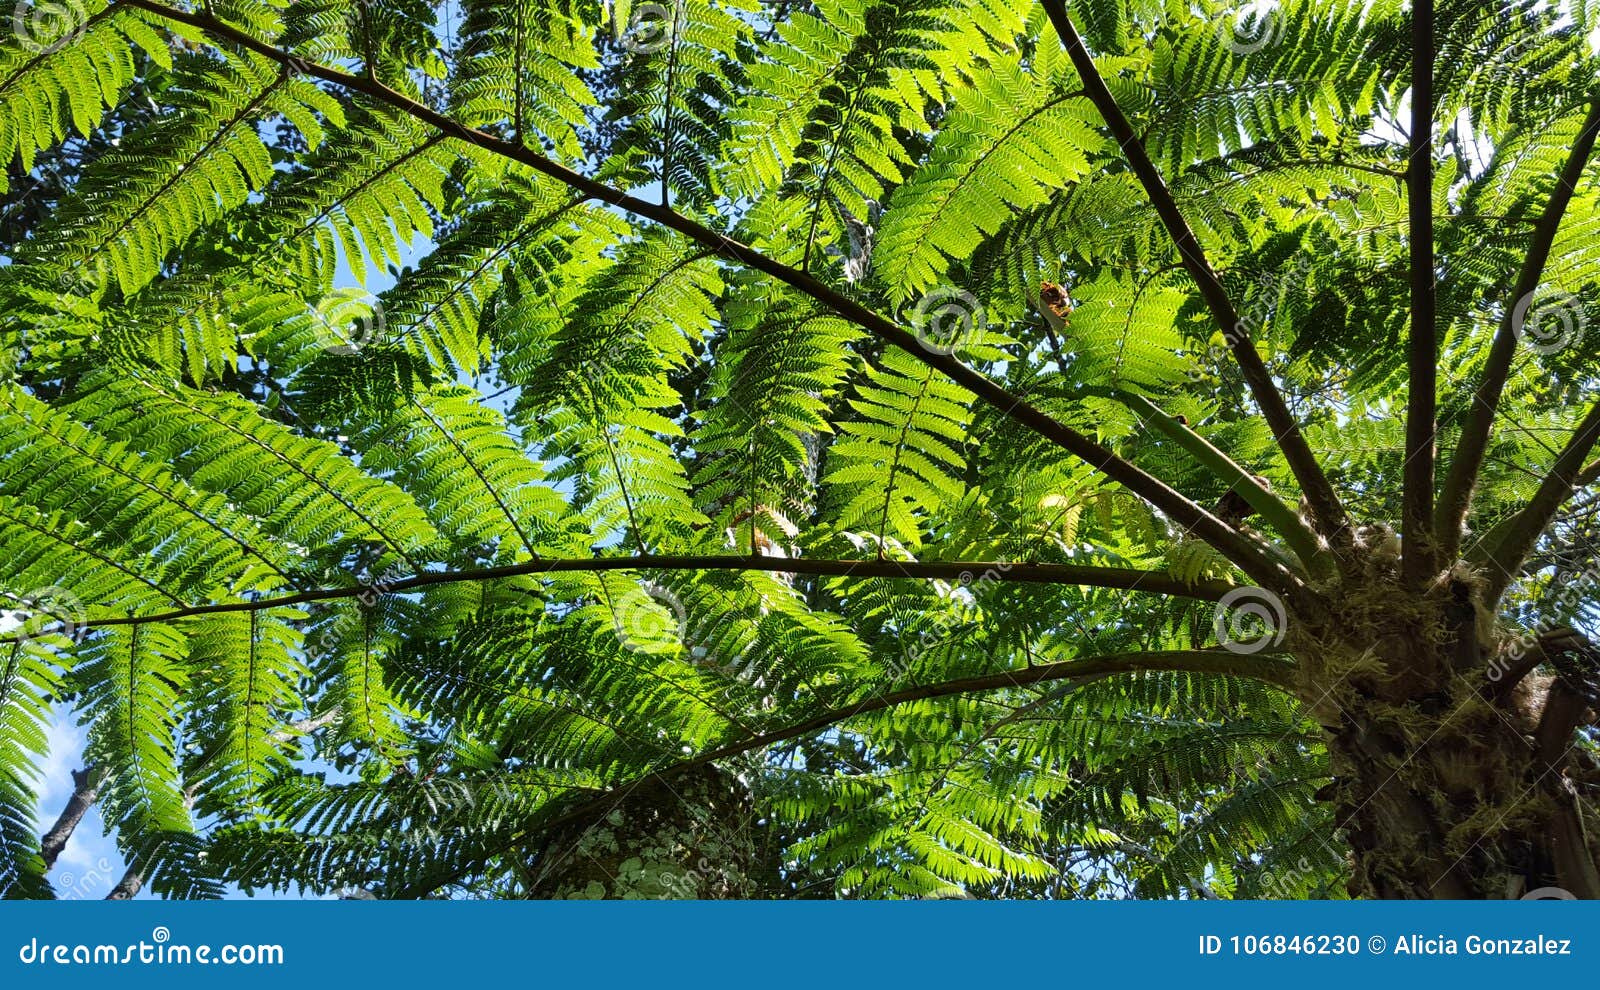 tree ferns detail, cyatheales